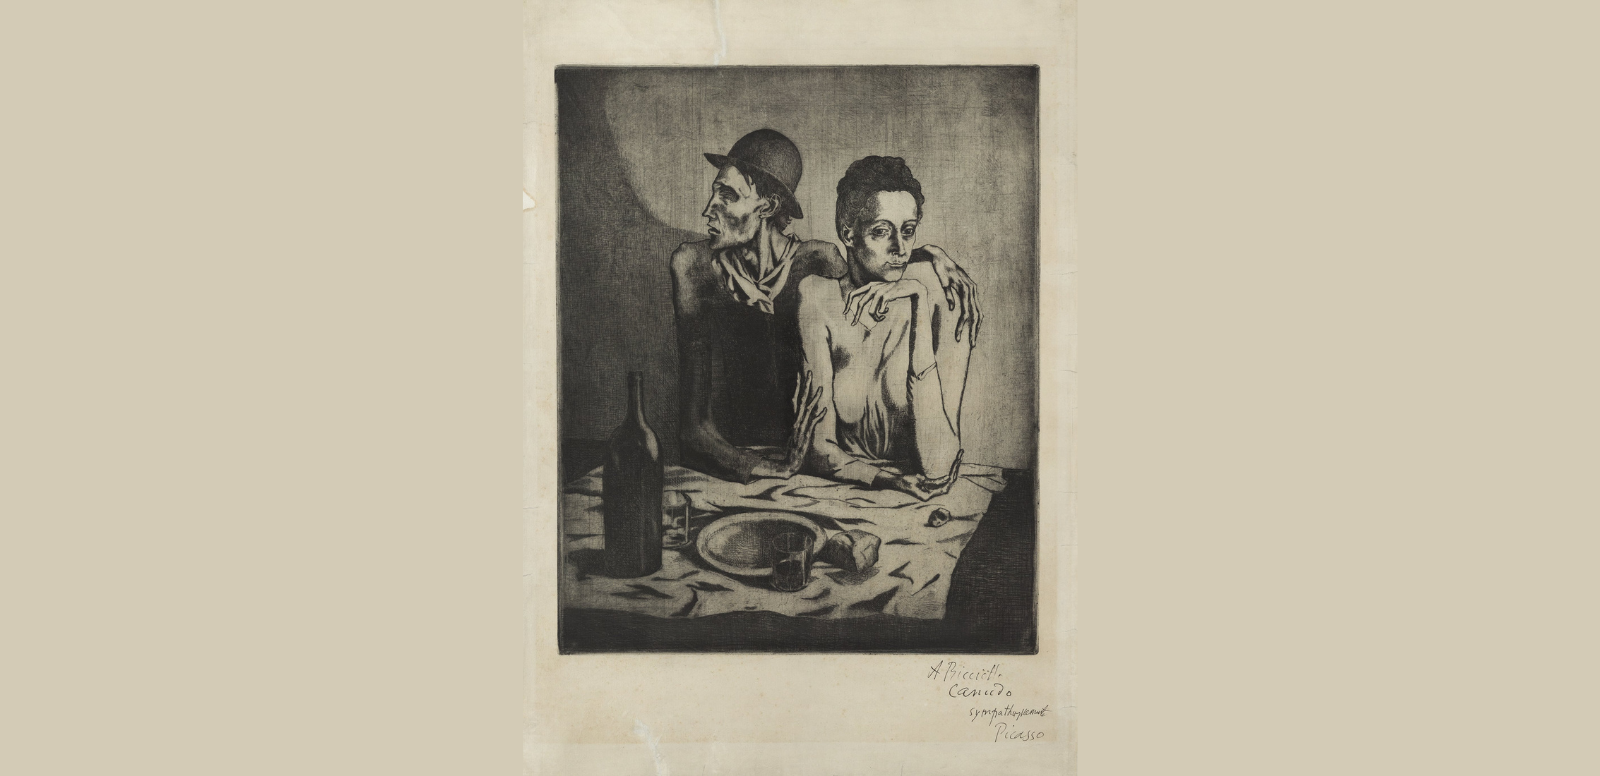 Pablo Picasso, La Comida Frugal, 1904.